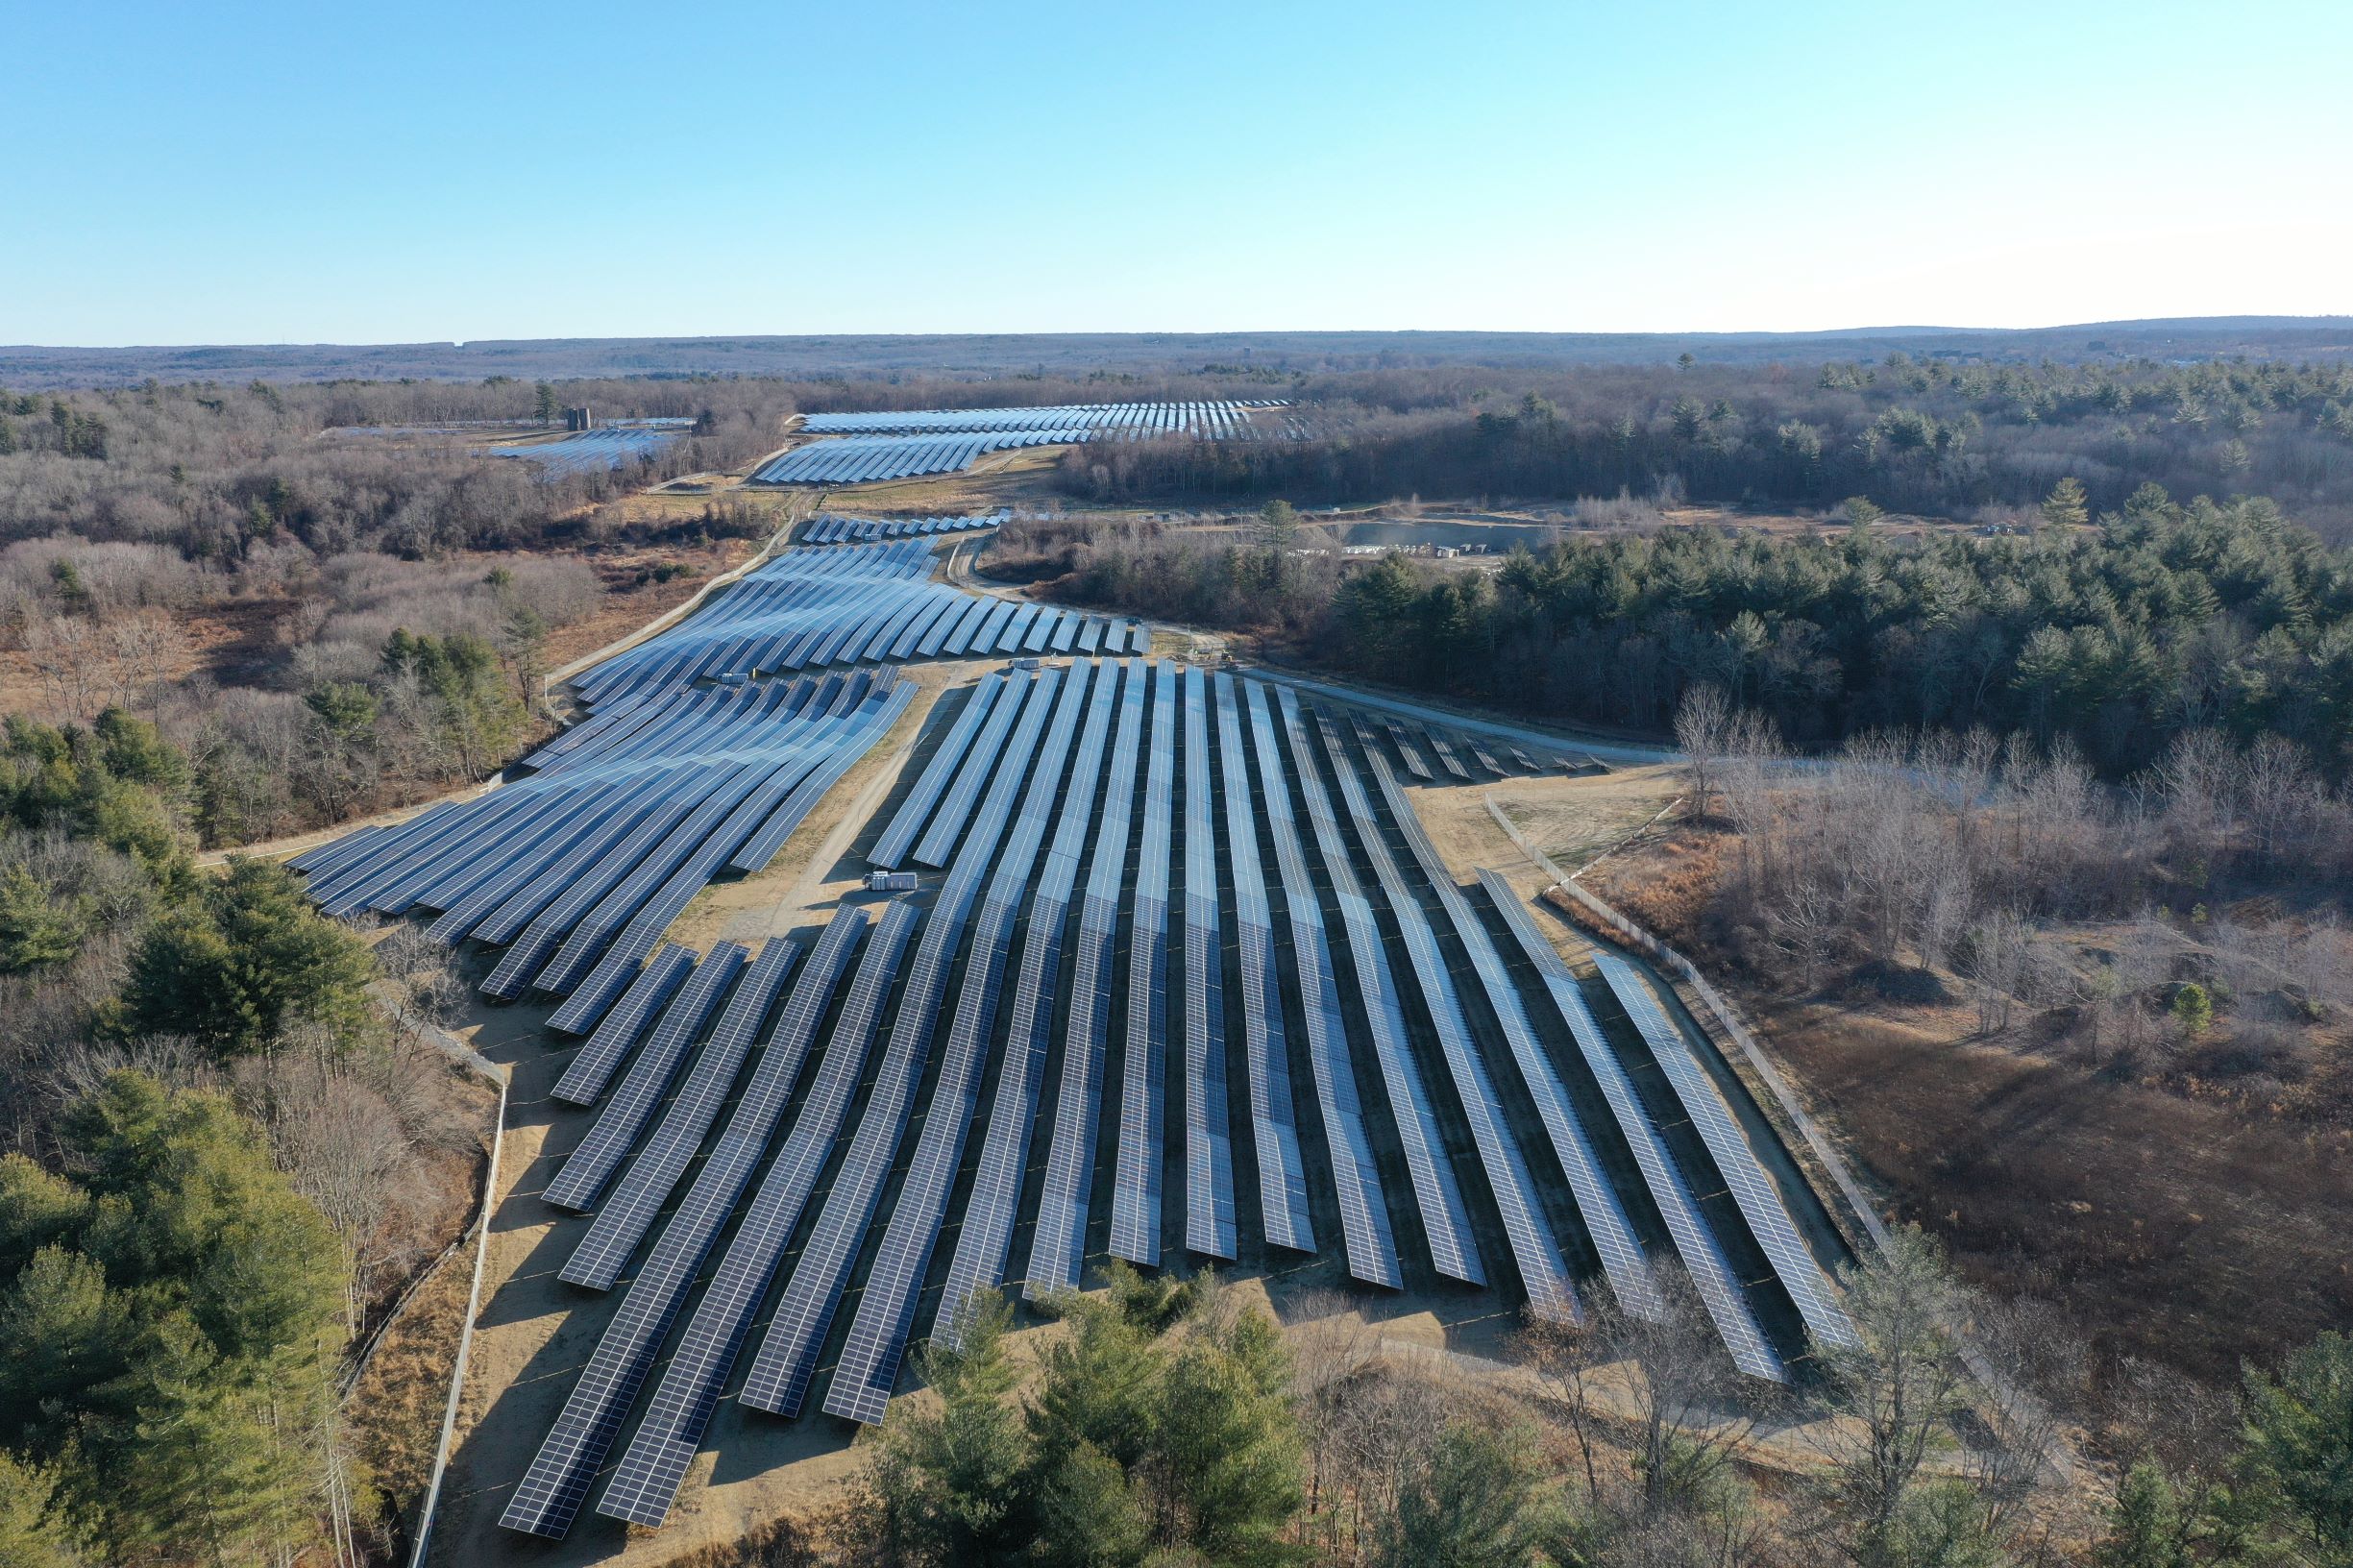 Terrasmart’s Full-Scope Approach Delivers Connecticut’s Largest Solar Plant